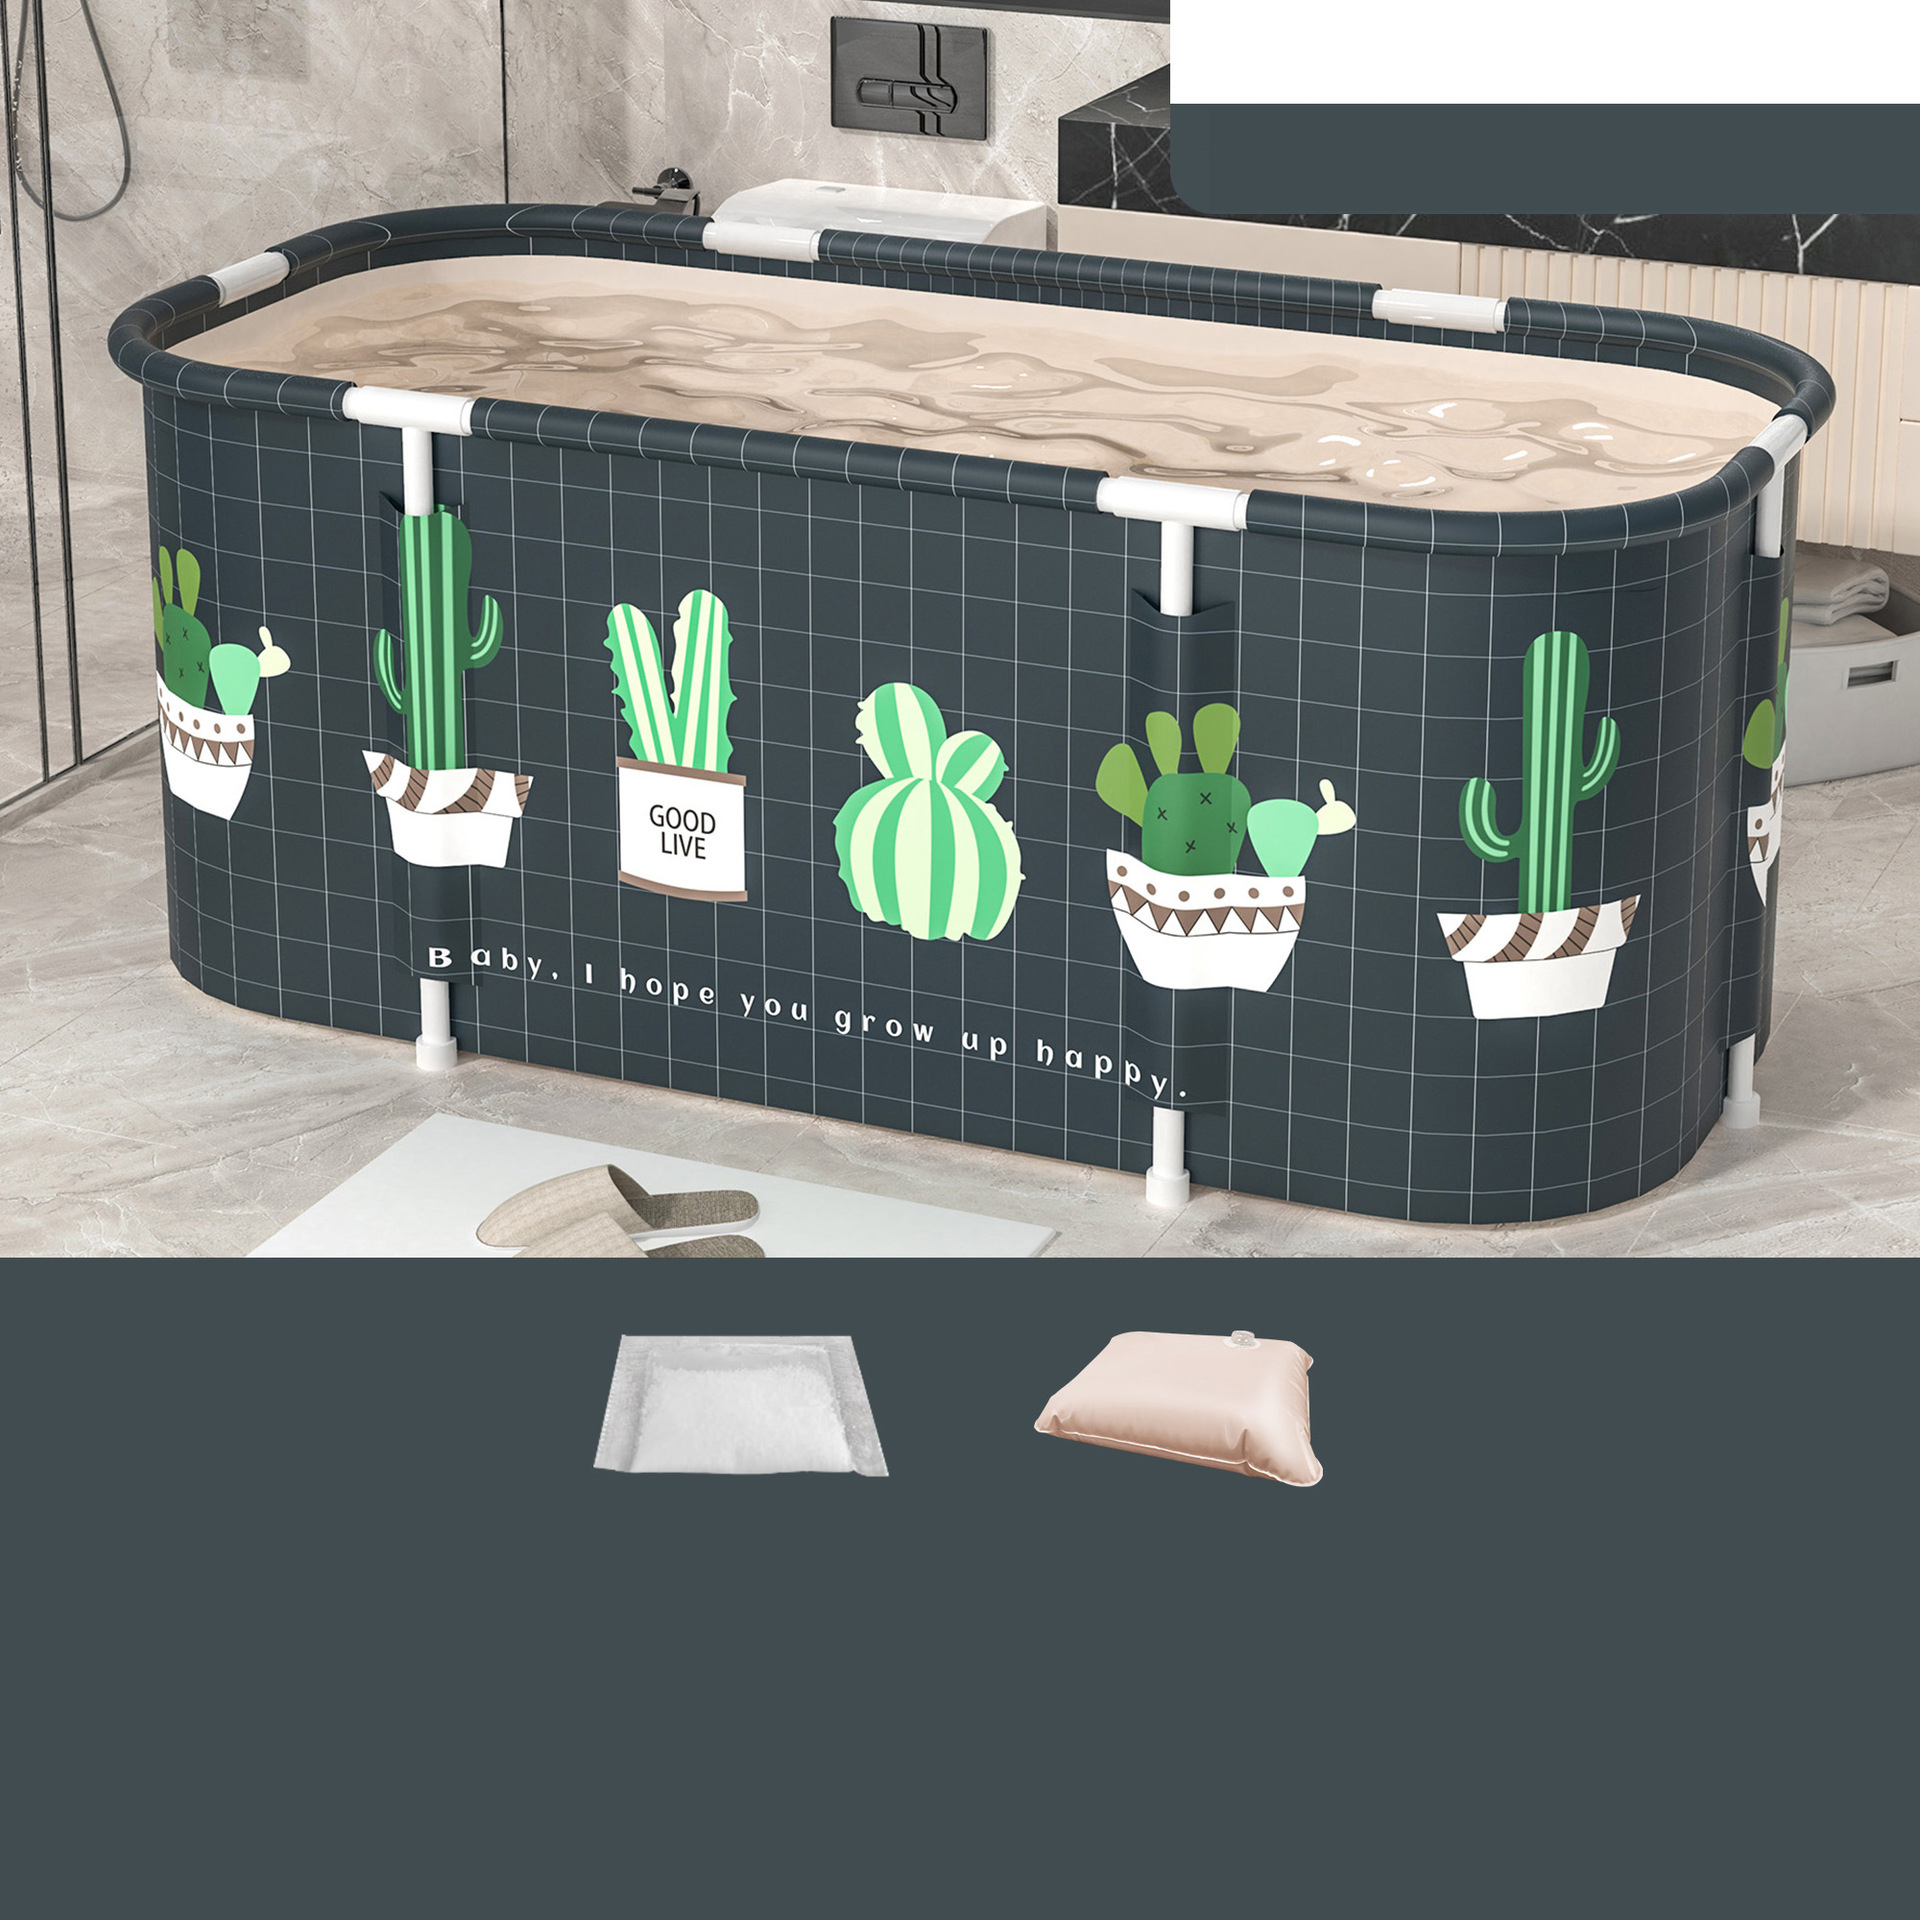 Cactus [Standard: Bath salt water injection cushion drain pipe]